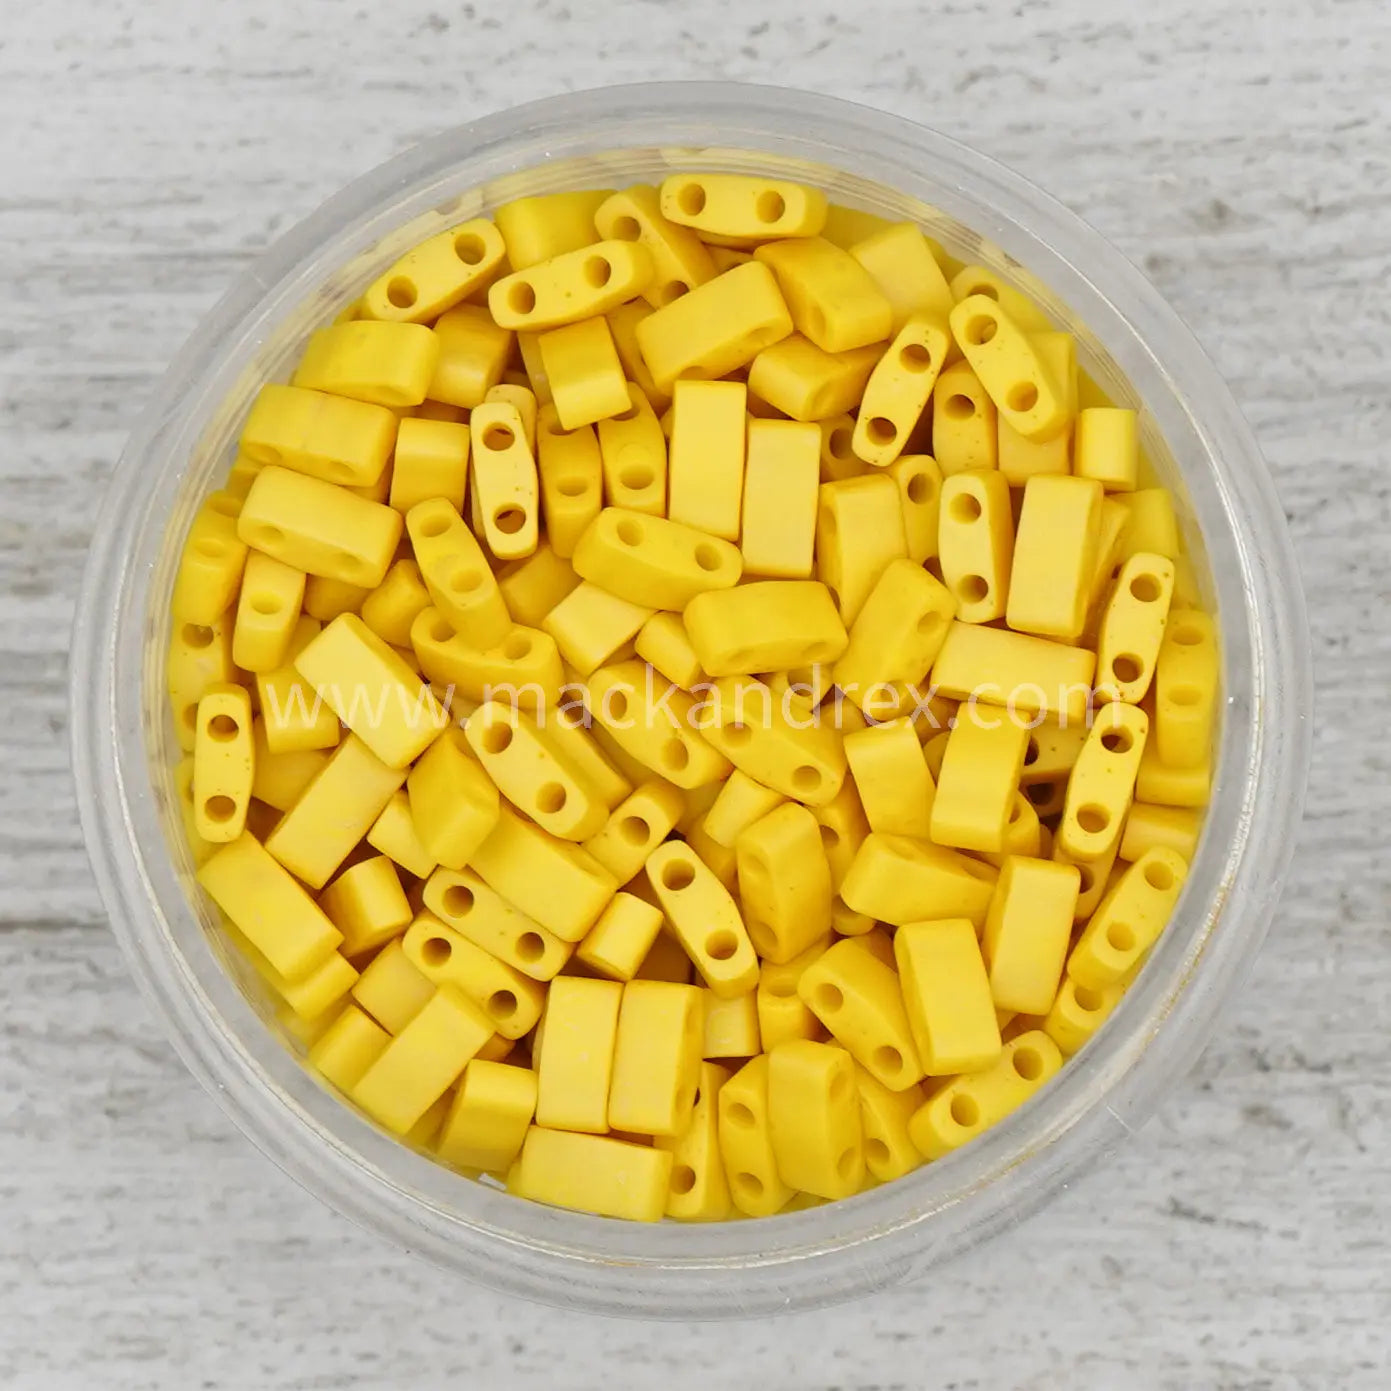 2311 Half Tila Beads - Bright Mustard - Mack & Rex